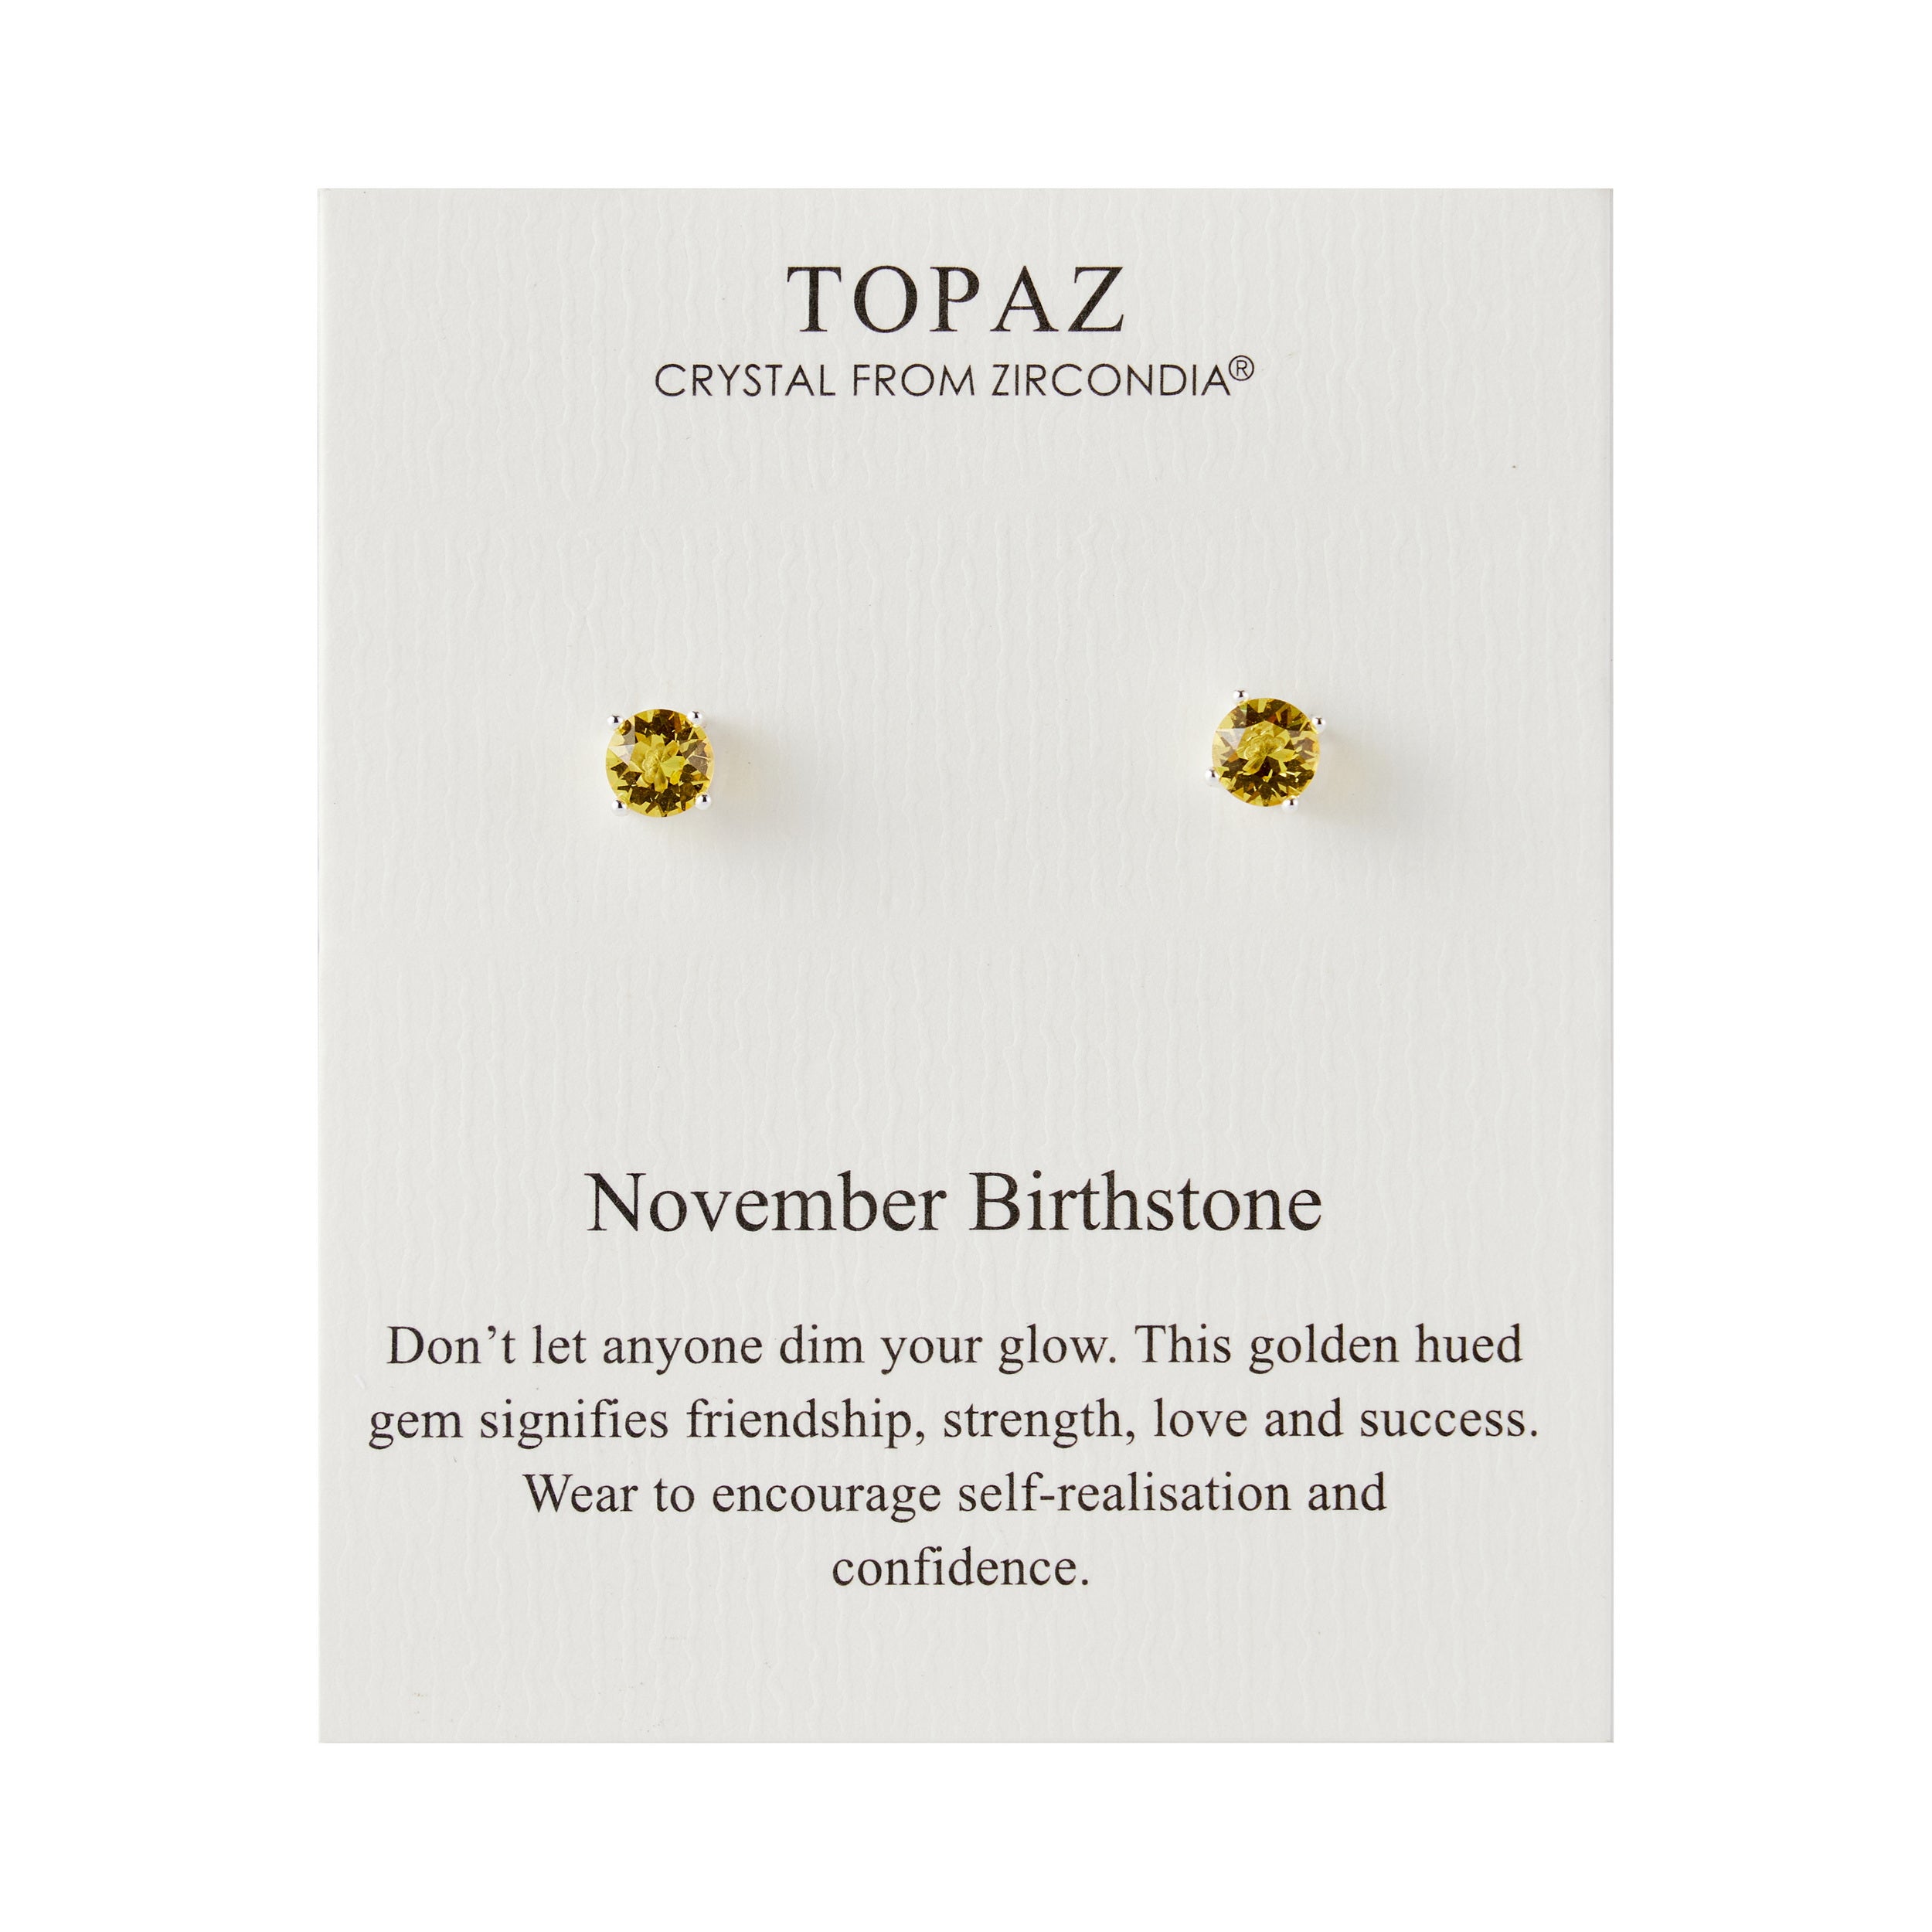 November (Topaz) Birthstone Earrings Created with Zircondia® Crystals